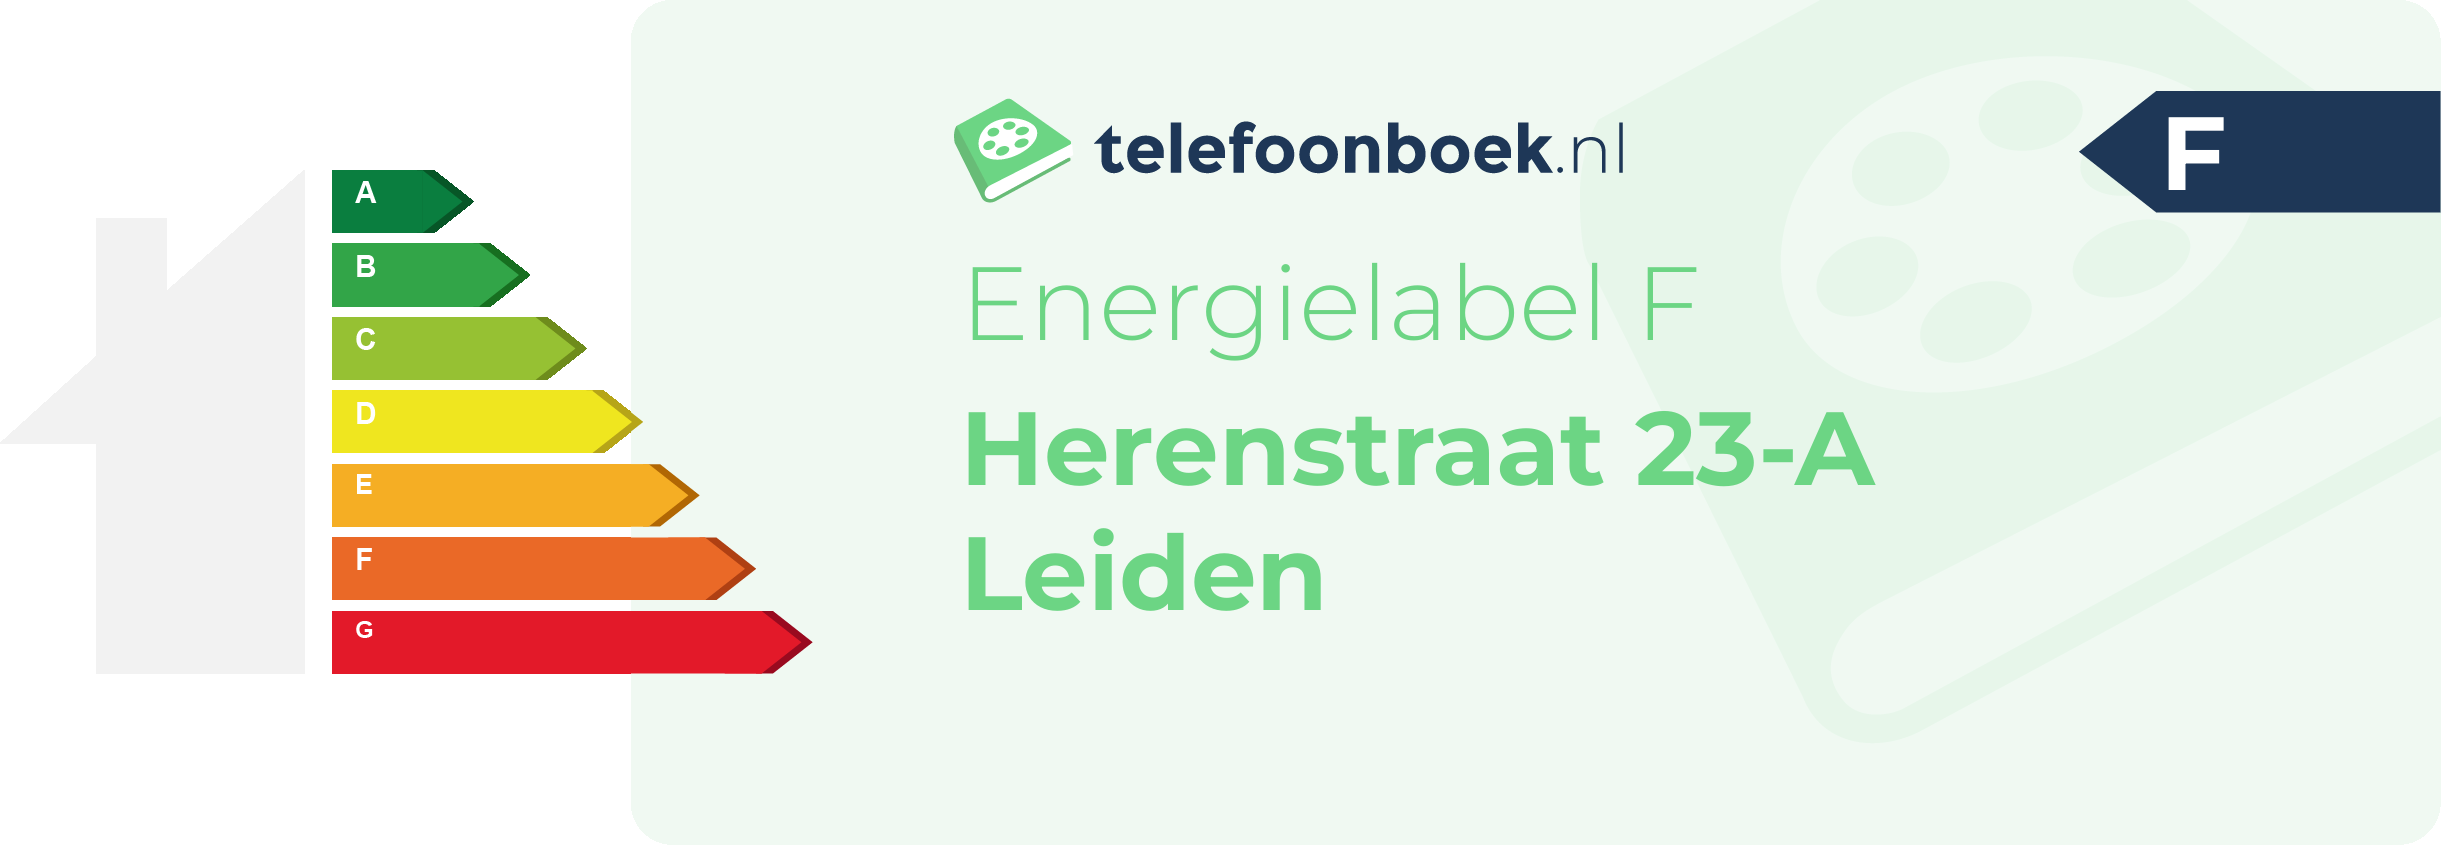 Energielabel Herenstraat 23-A Leiden